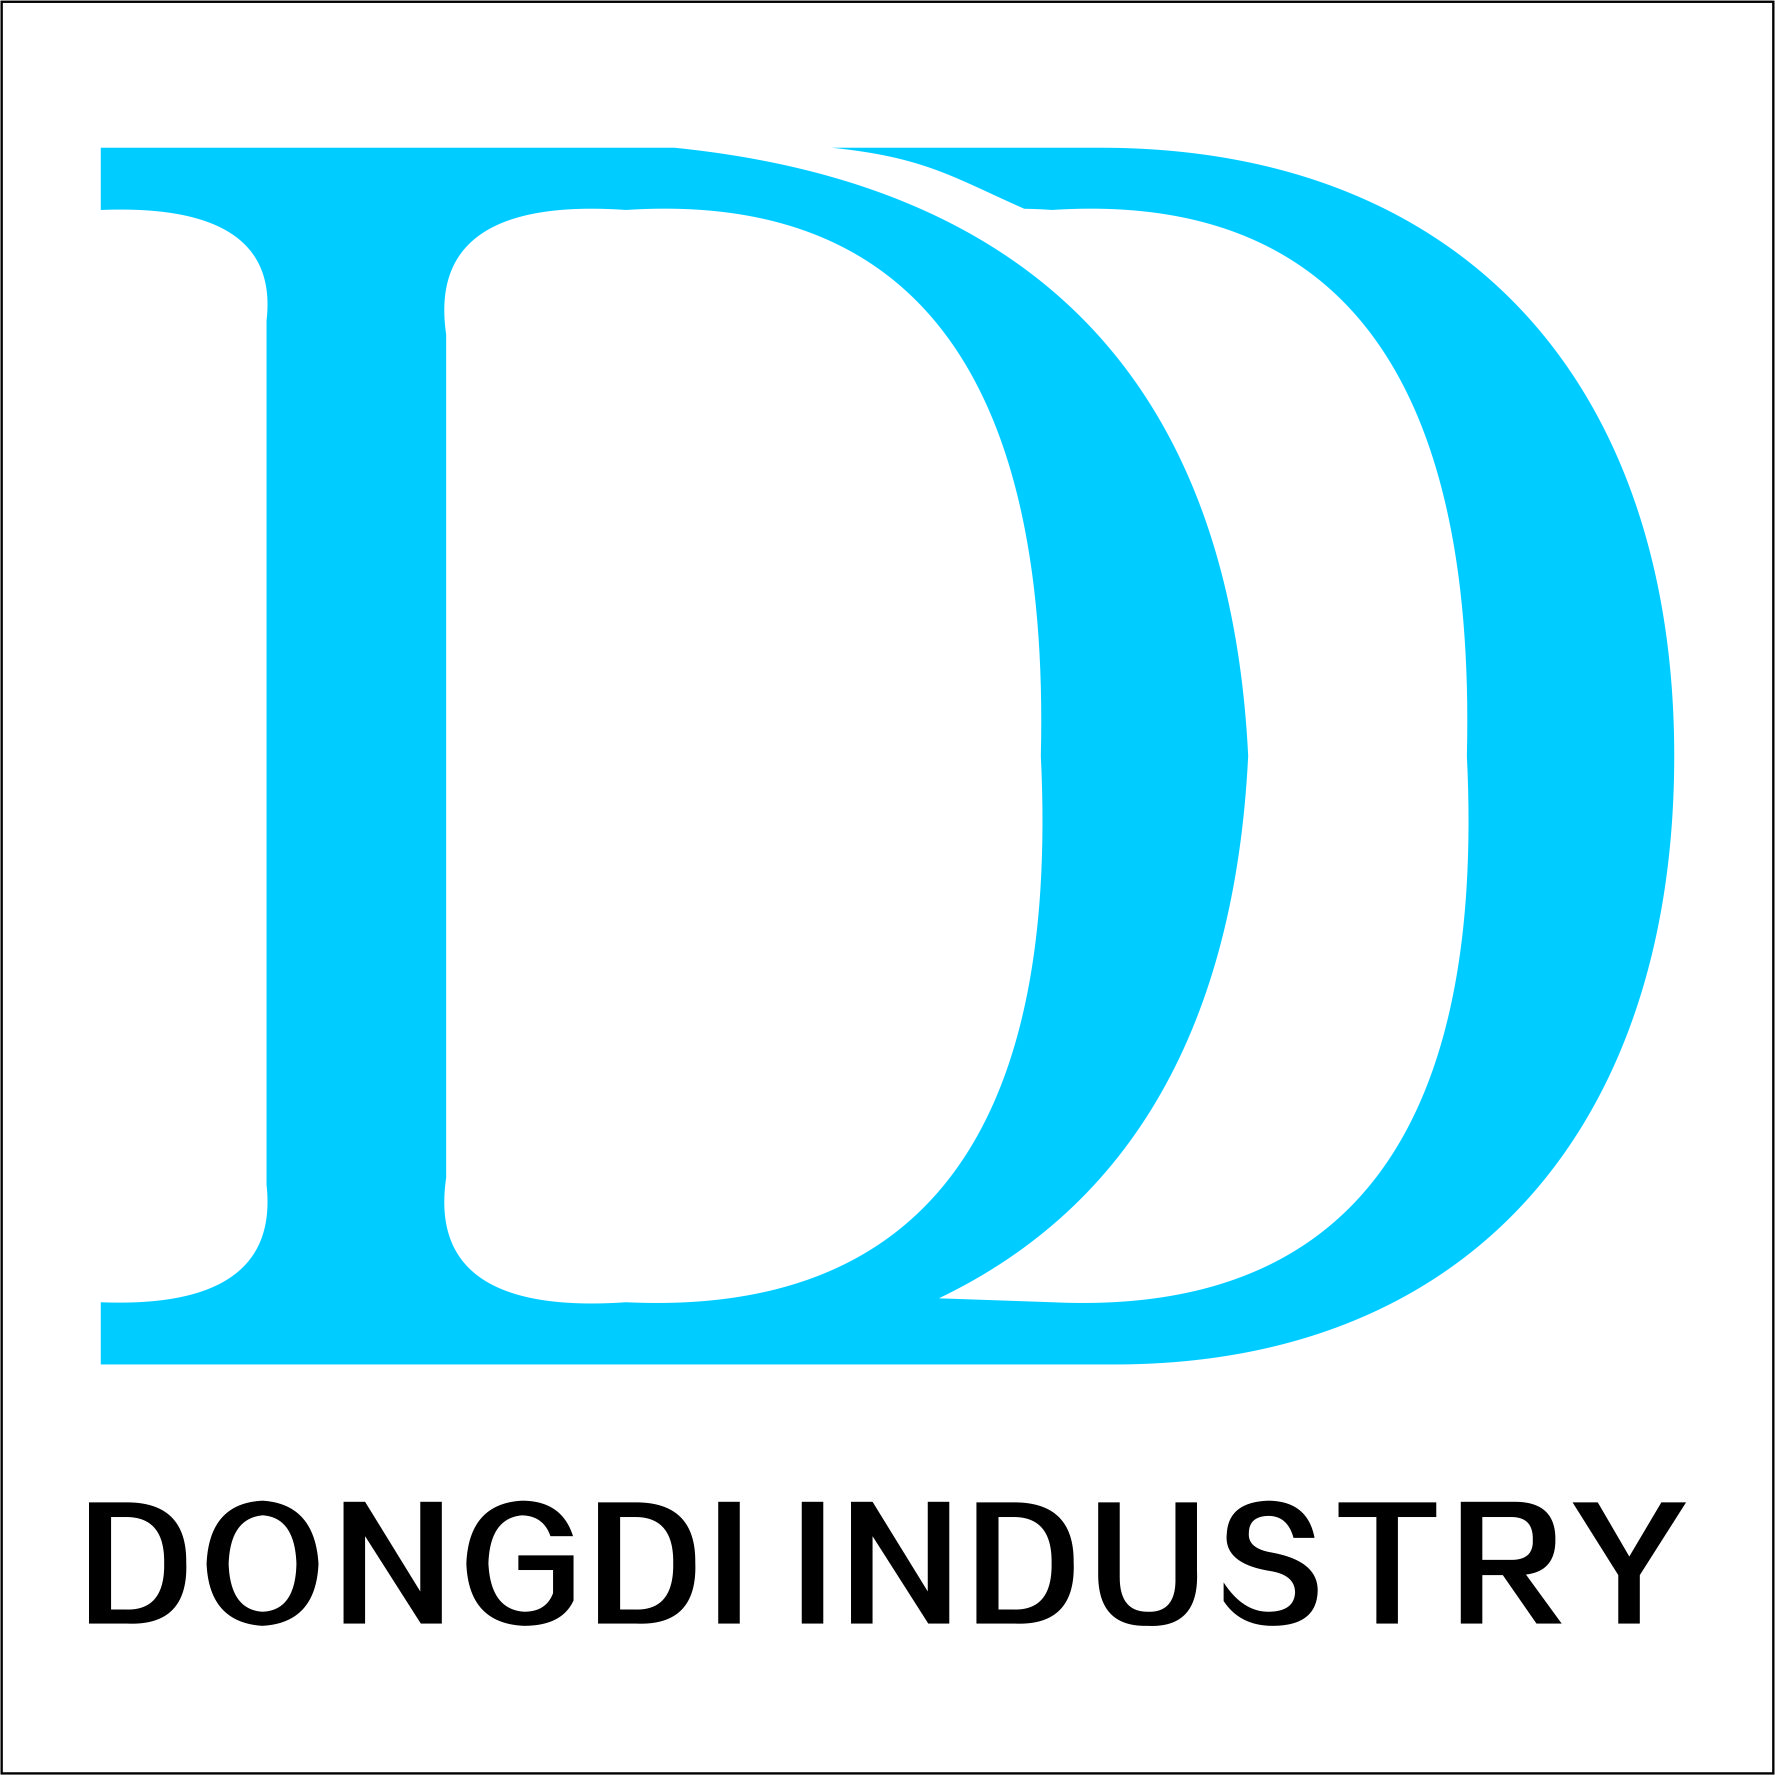 YINGKOU DONGDI INDUSTRIAL CO., LTD.